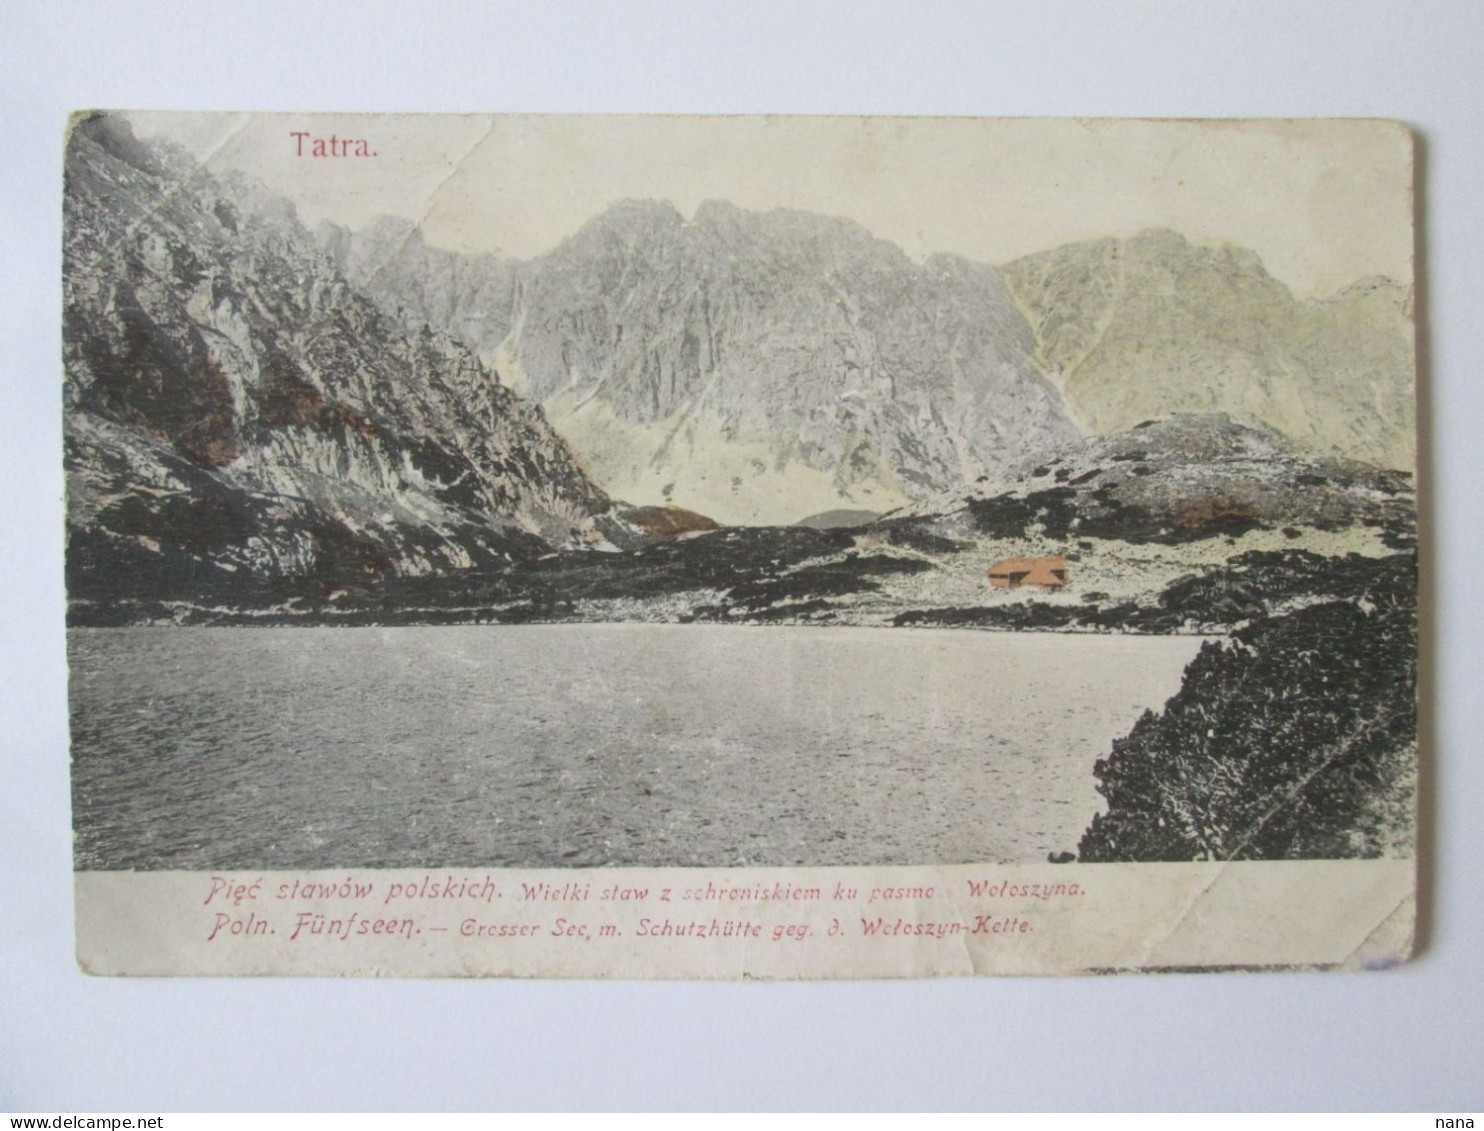 Pologne-Tatras/Piec Stawow Polskich Carte Postale 1905/Poland-Tatra Mountains Unused Postcard 1905 - Polen